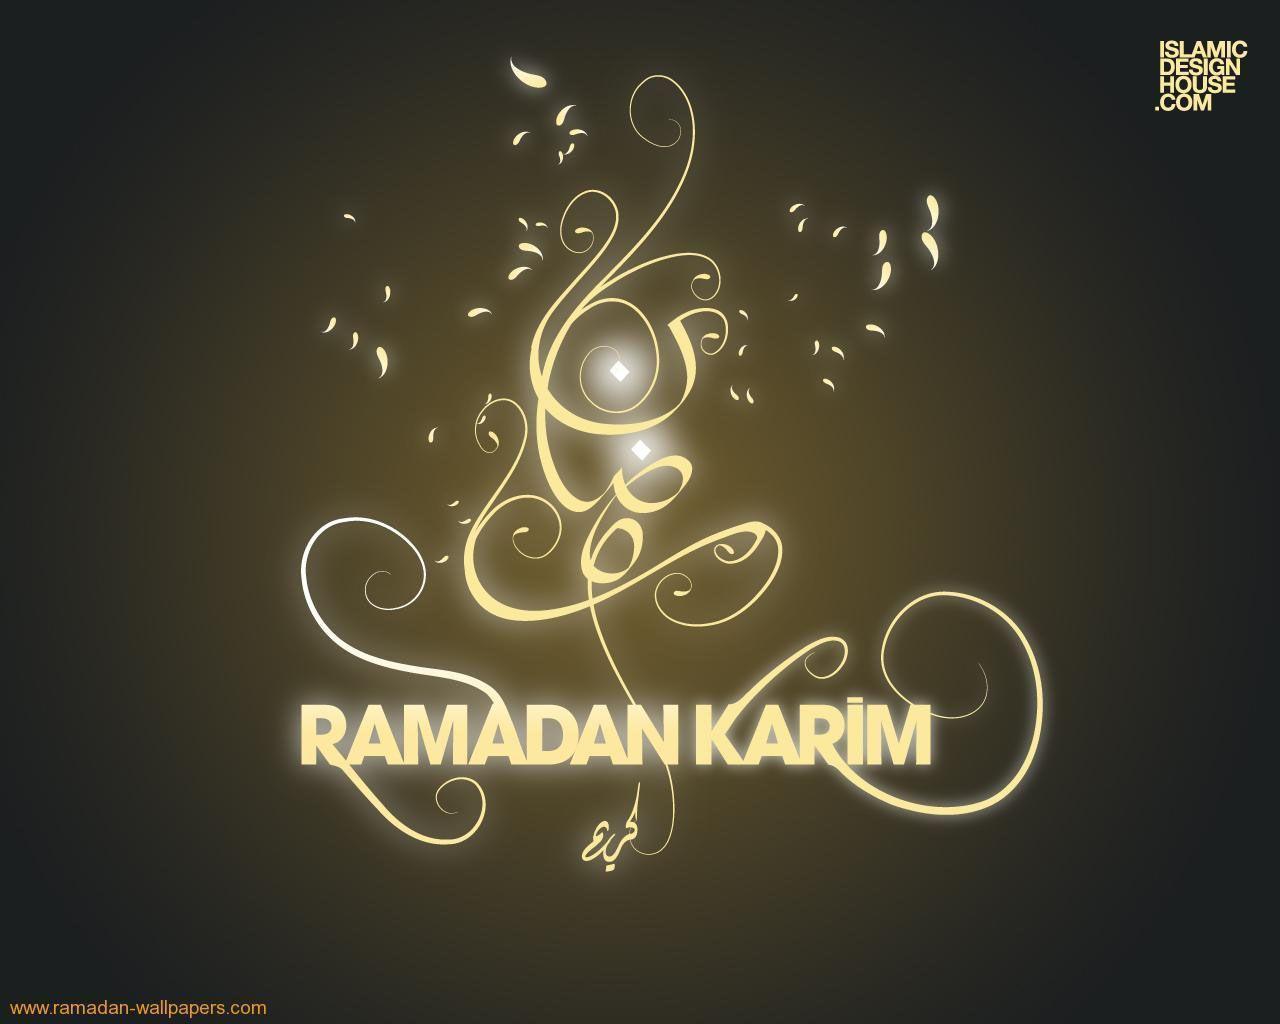 Ramadan Mubarak In Arabic